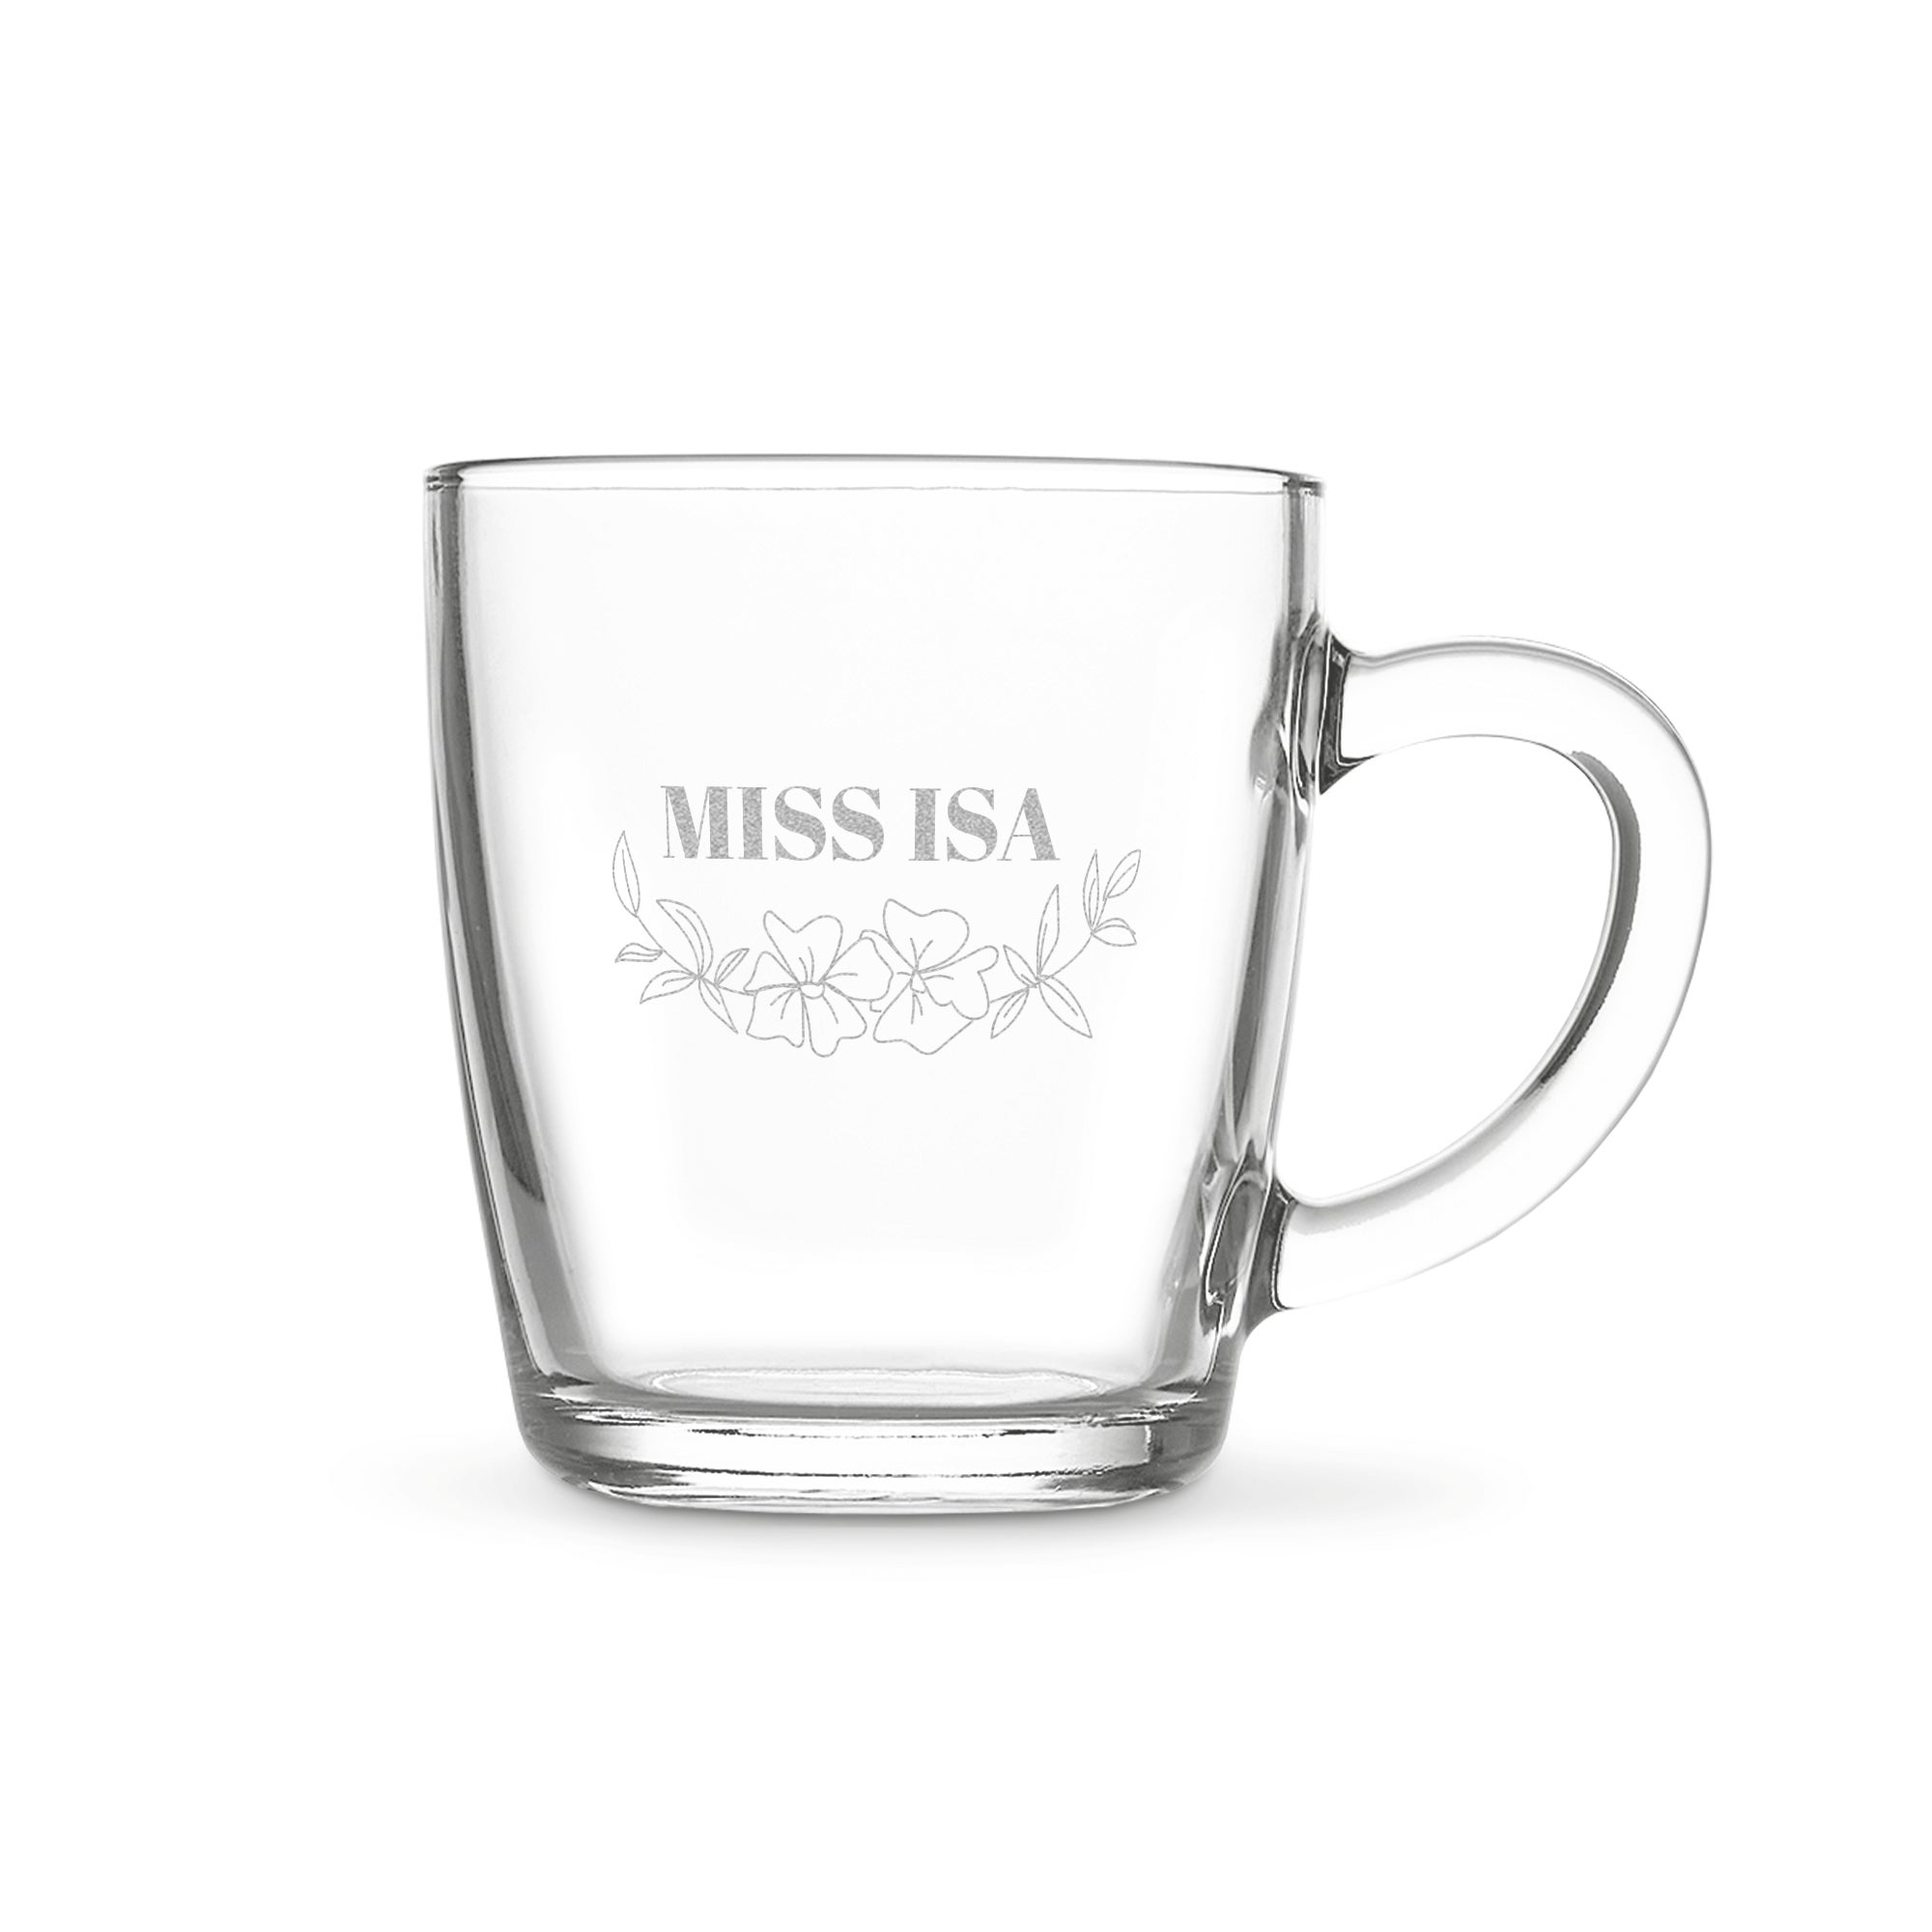 Personalised glass mug - Teacher - Engraved - 2 pcs